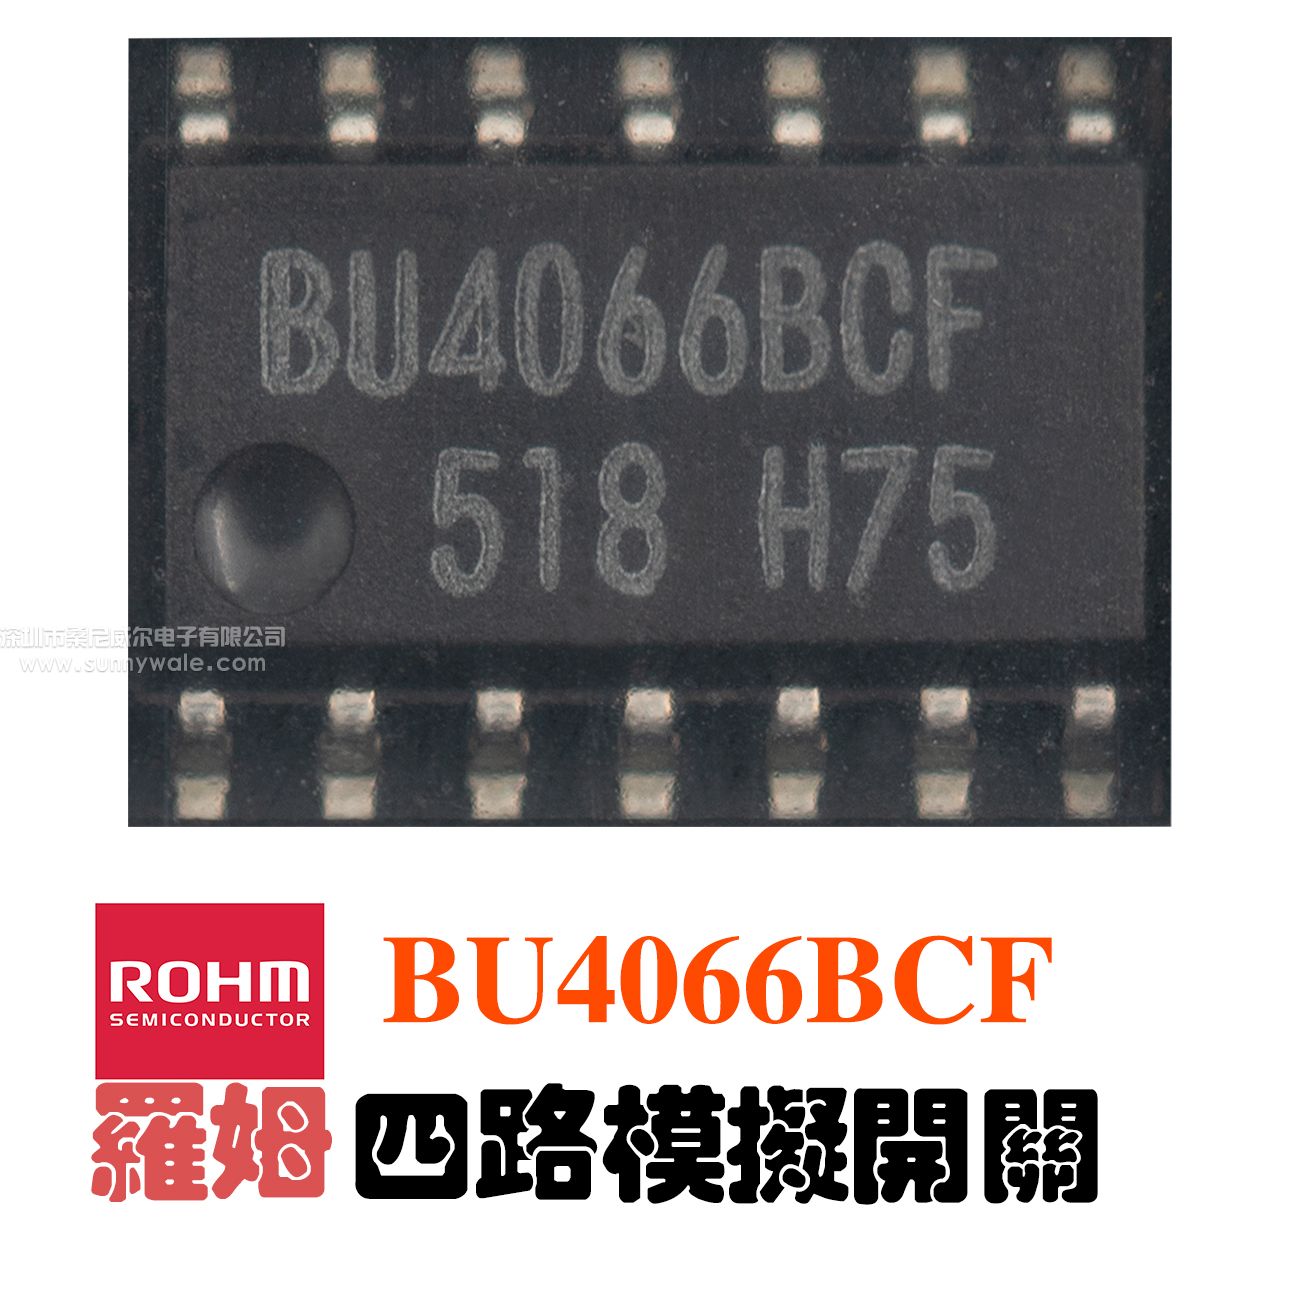 BU4066BCF, ROHM半导体，四路模拟信号开关，四路数字信号开关，四路信号开关，四路模拟或数字信号开关